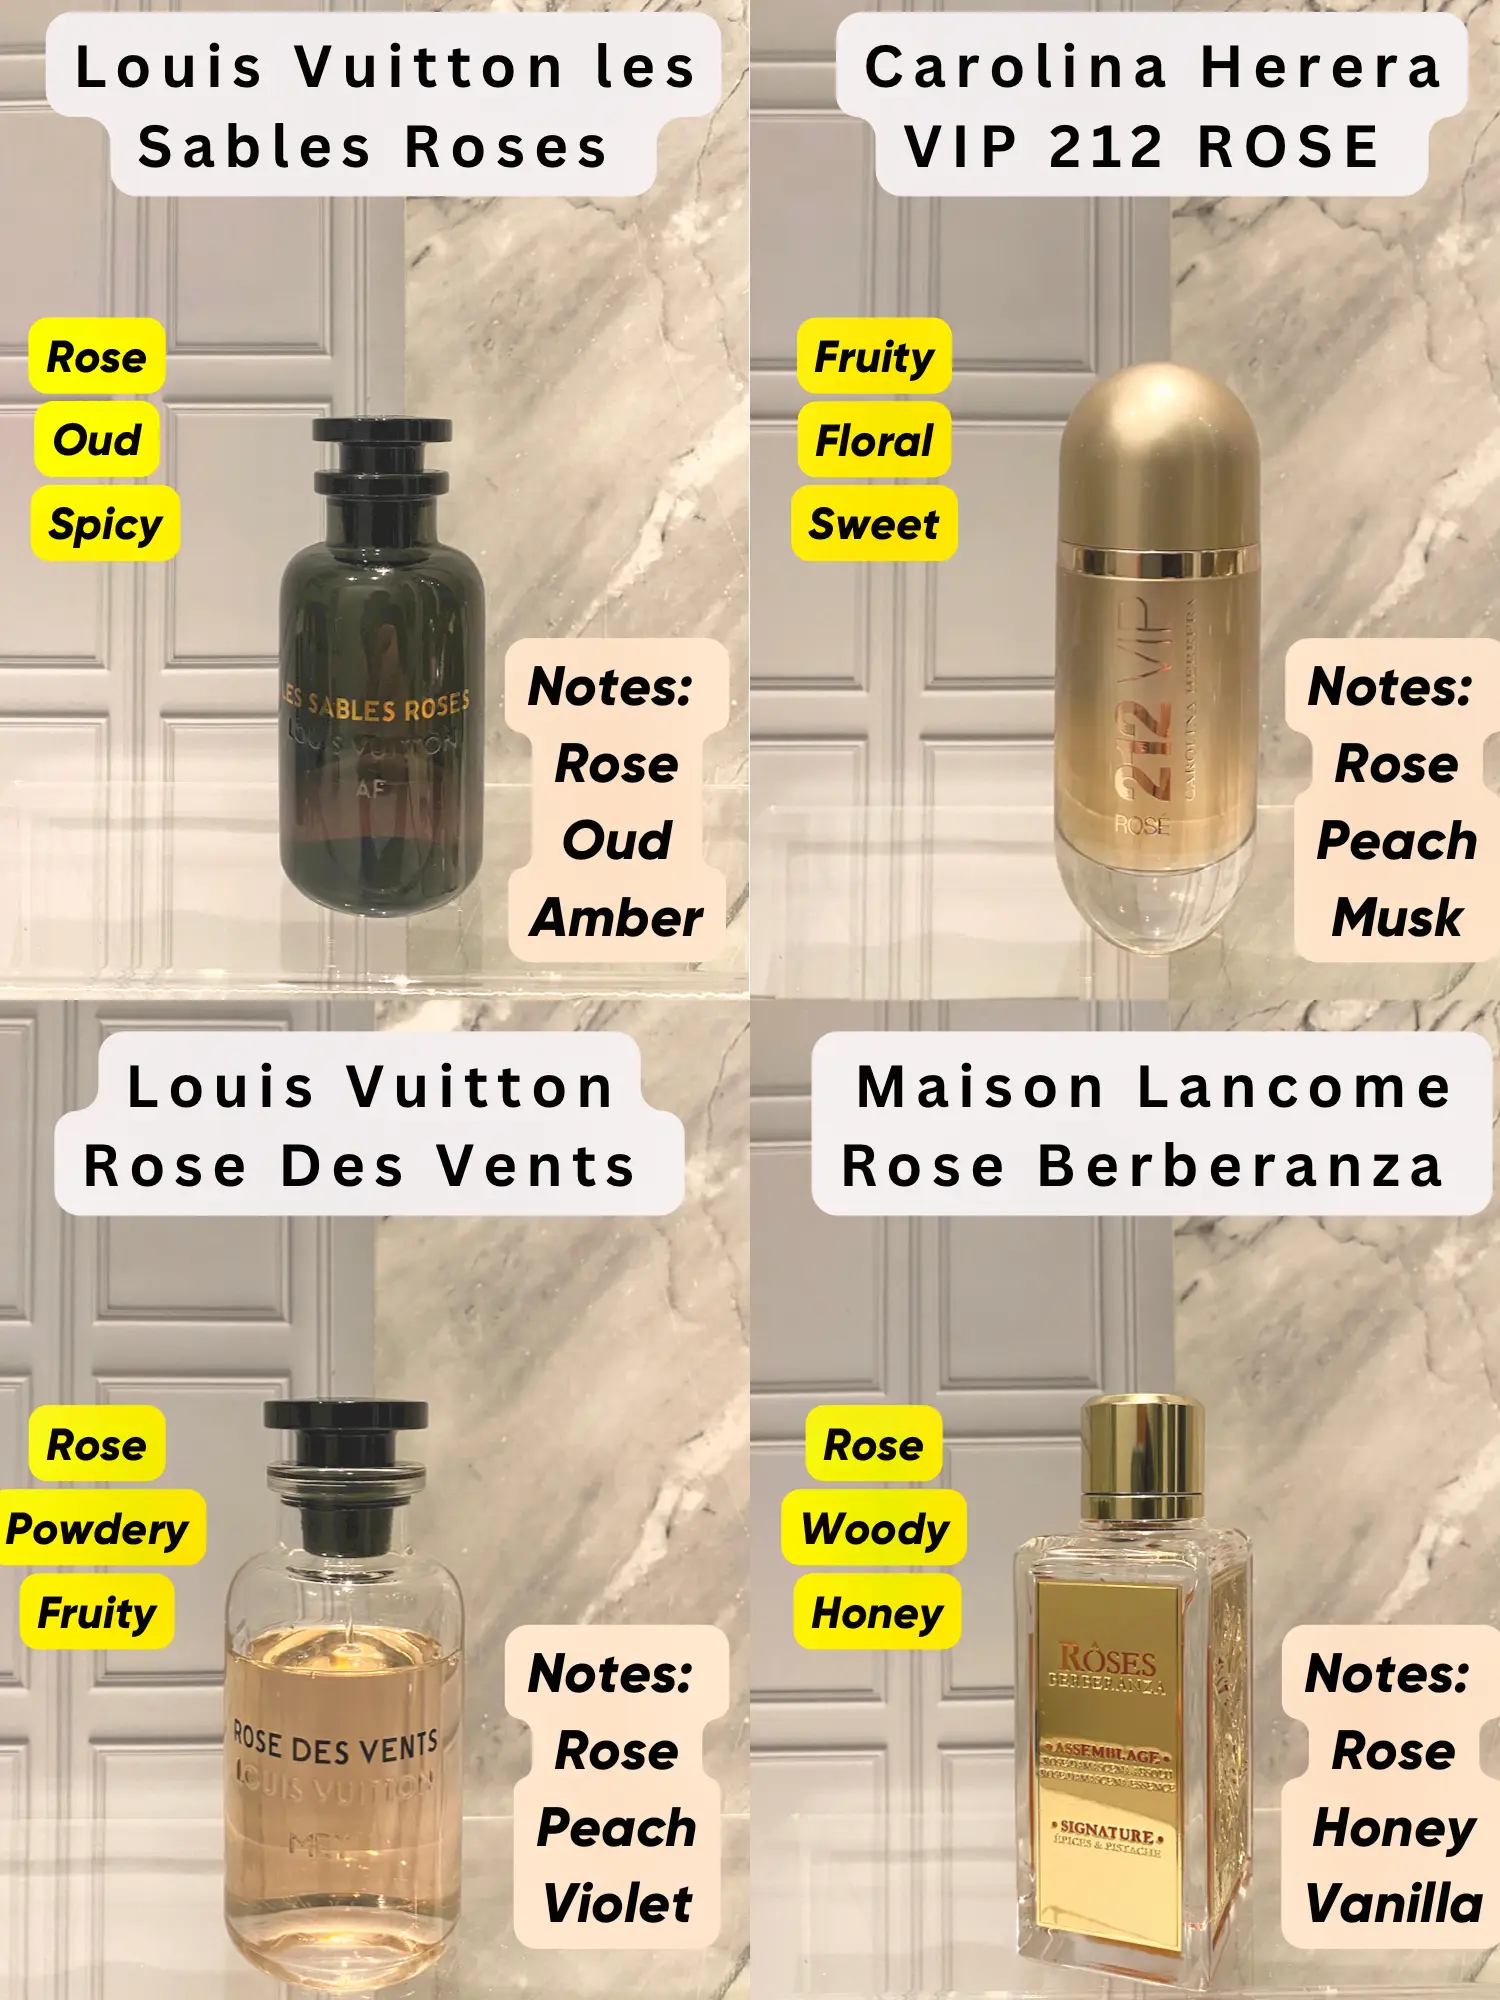 Koleksi Parfum Les Extraits dari Louis Vuitton yang Melibatkan